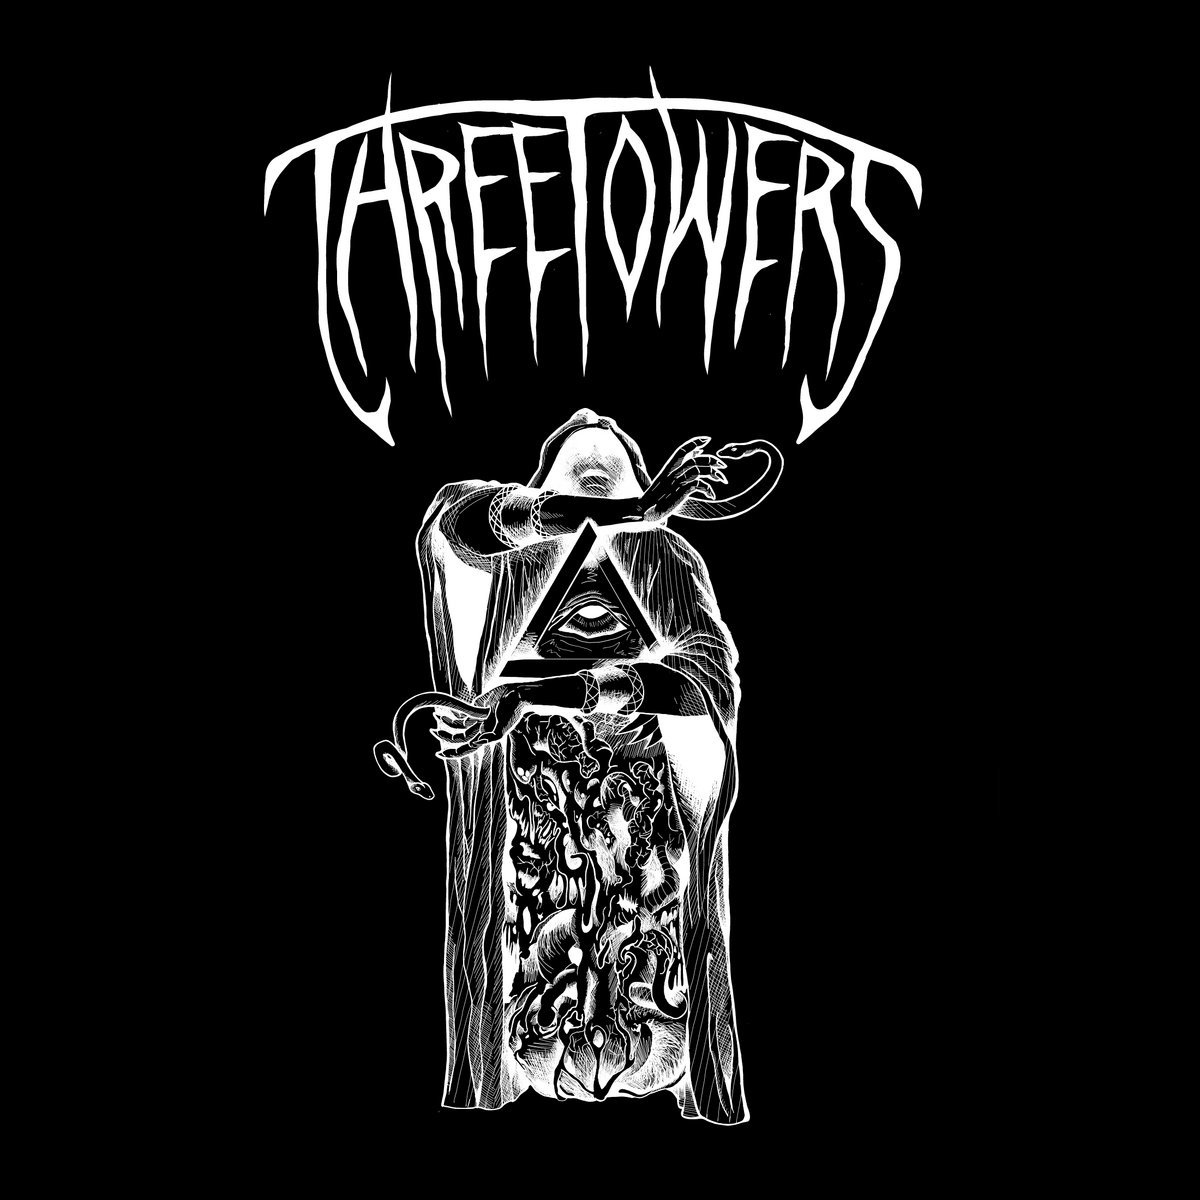 THREE TOWERS - Deity cover 